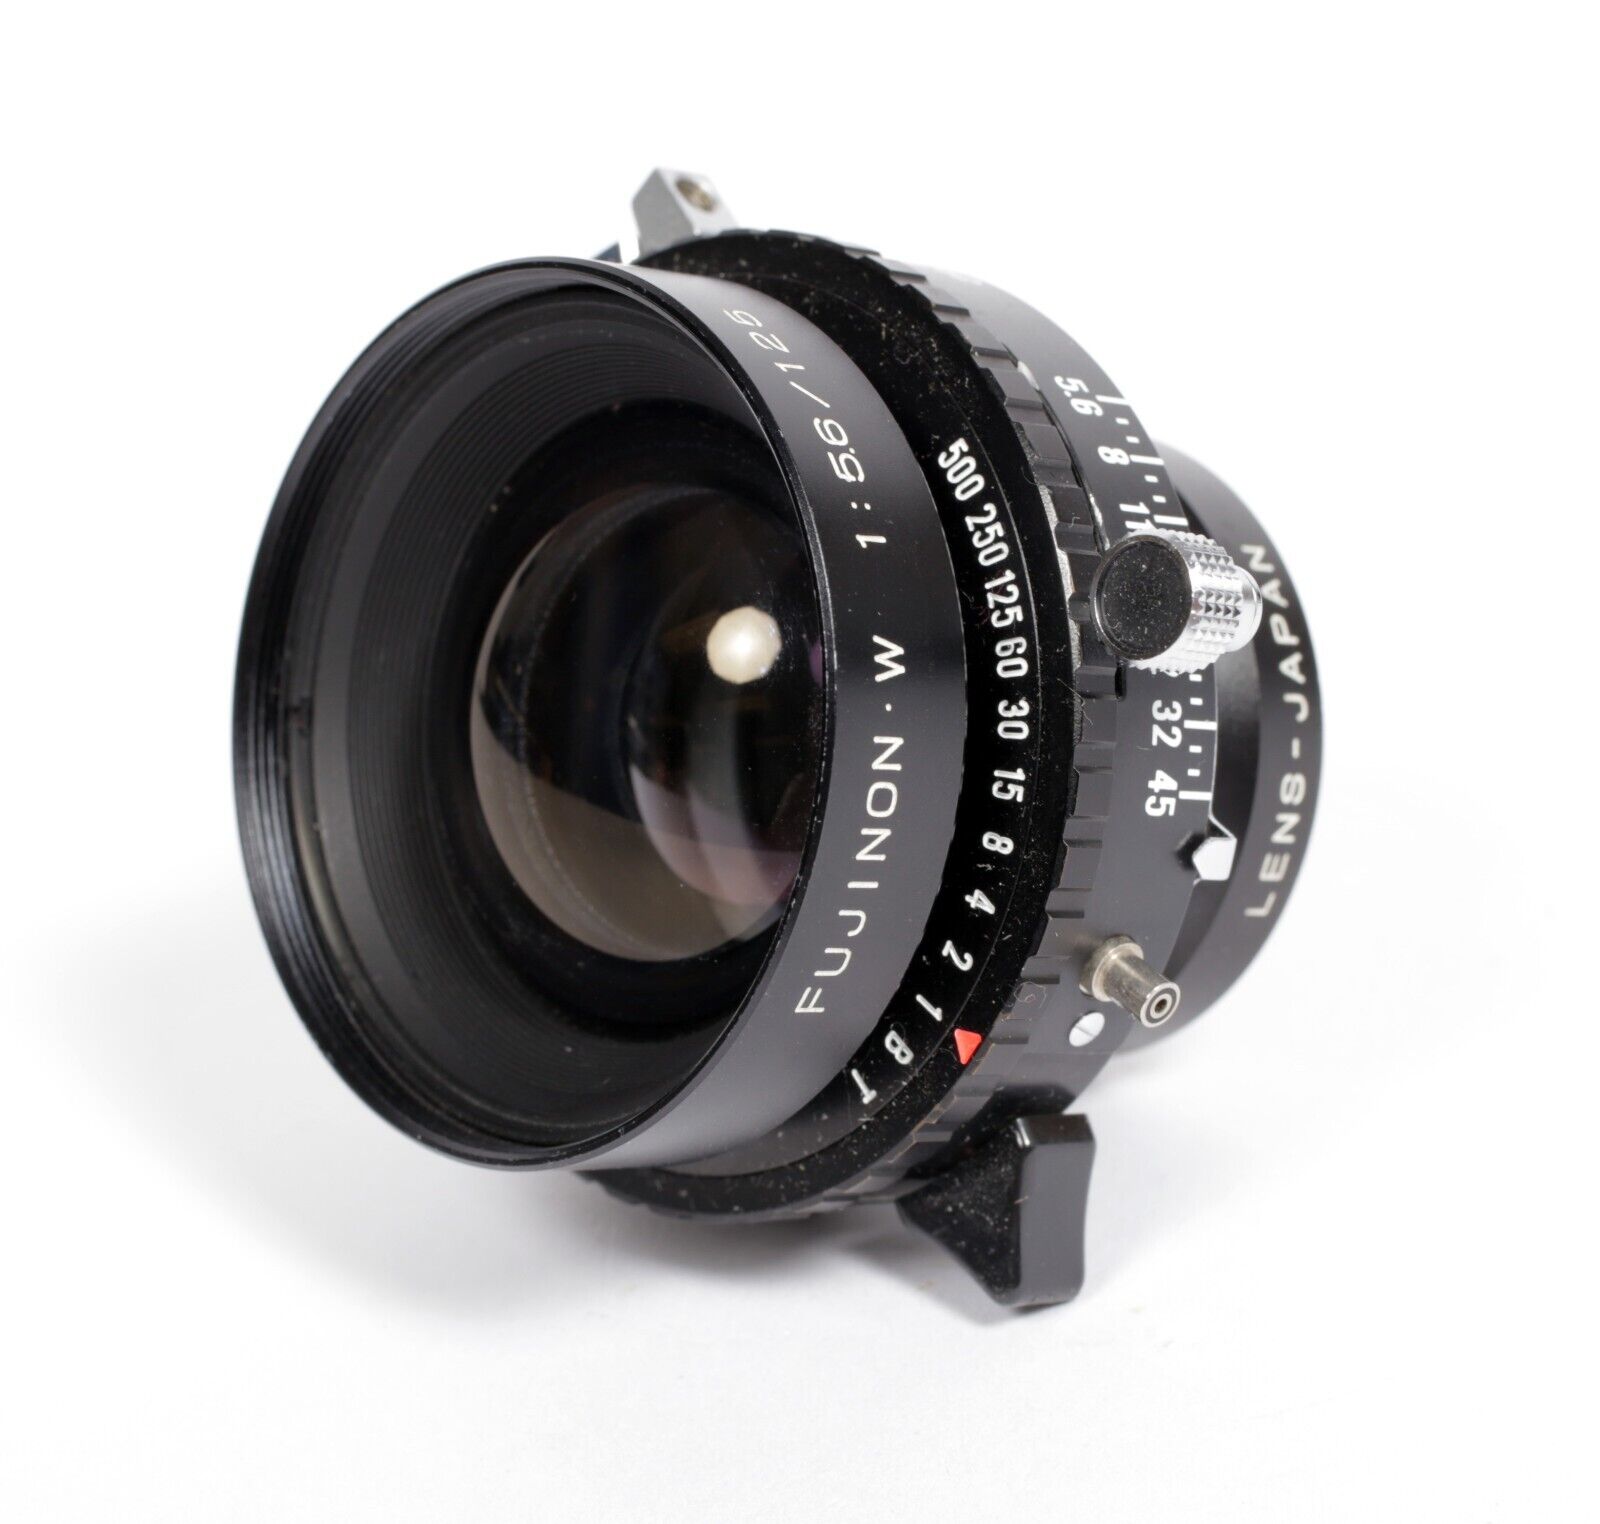 Fuji Fujinon W (black) 125mm F5.6 lens in Copal #0 shutter #107